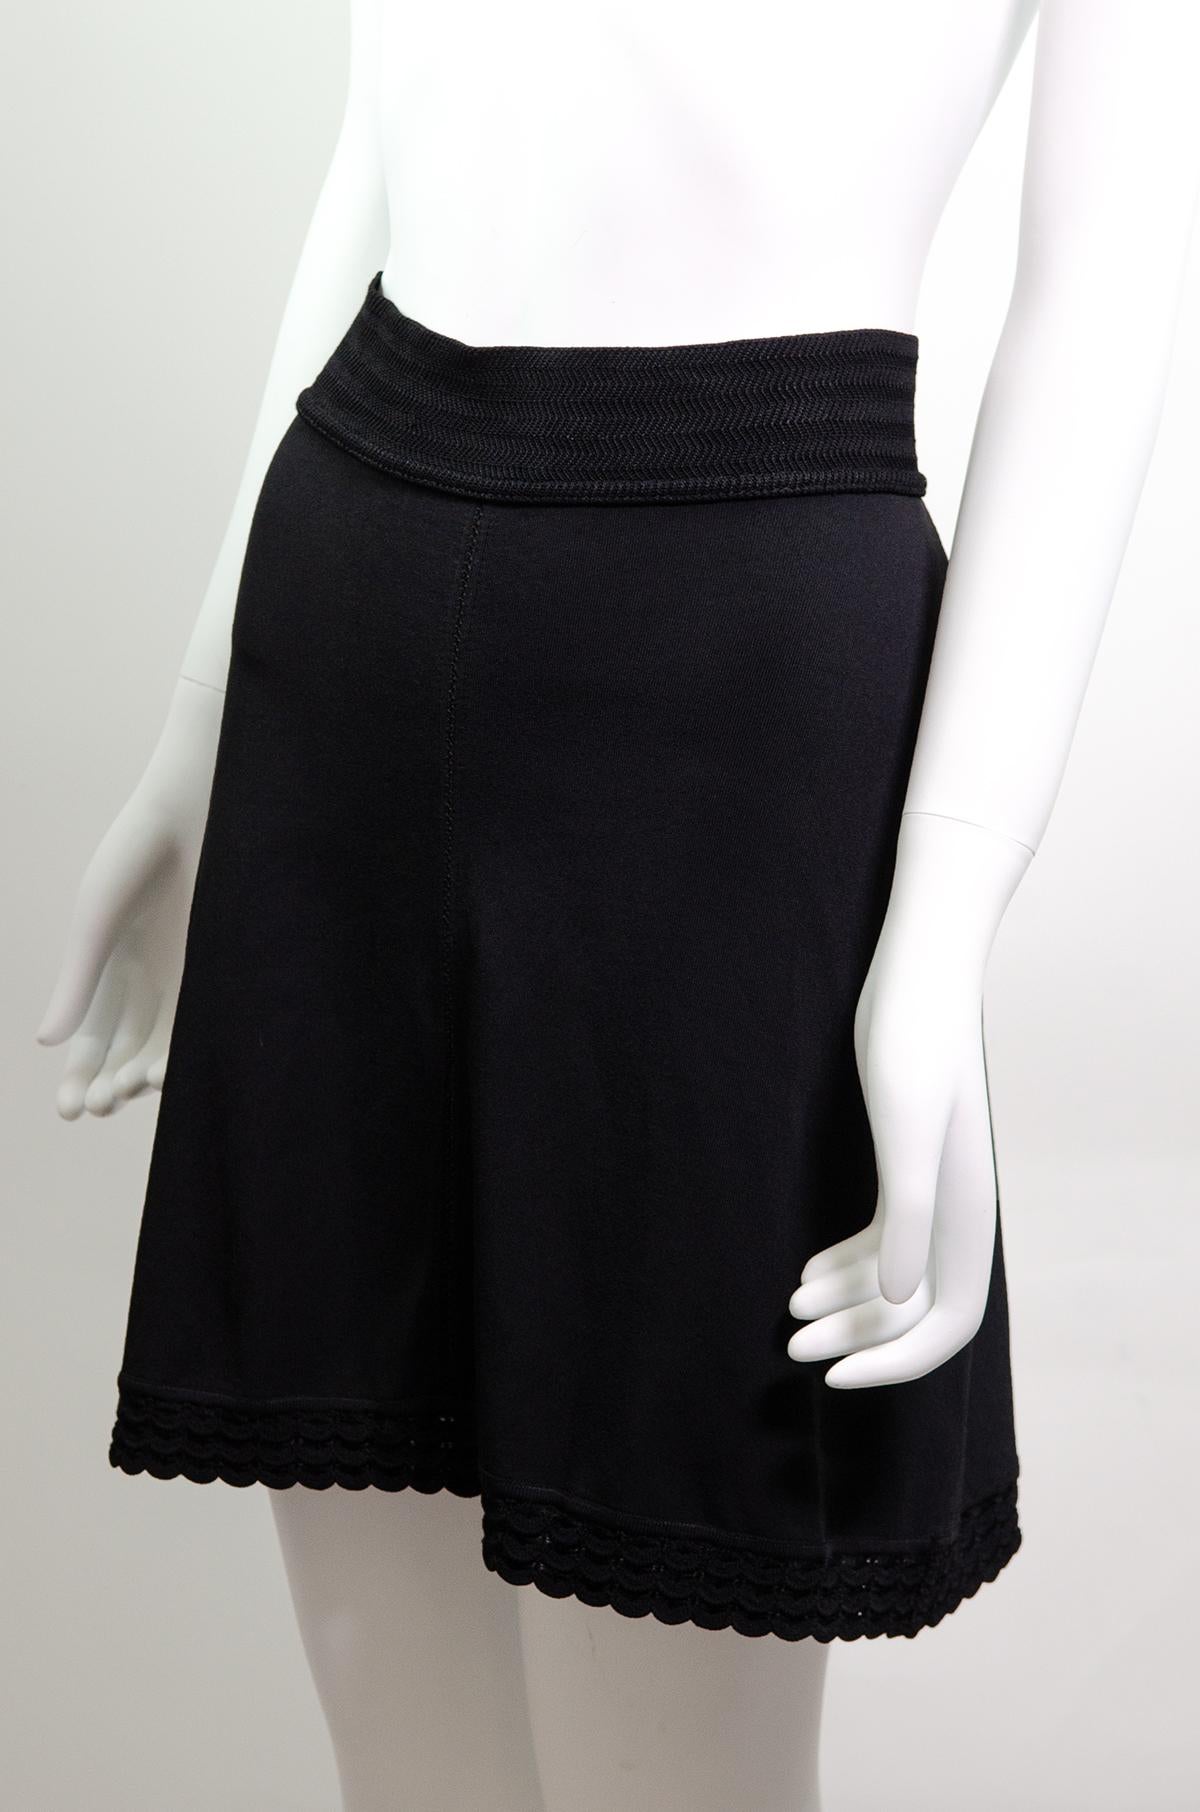 Azzedine Alaïa Vintage 1990s Mini Skirt

Brand: Alaïa
Designer: Azzedine Alaïa
Collection / Year: 1990s
Fabric: Viscose / Rayon
Color: Black
Size: S


Effortlessly chic. This vintage 90s mini skirt is by Azzedine Alaïa. So elegant, this versatile